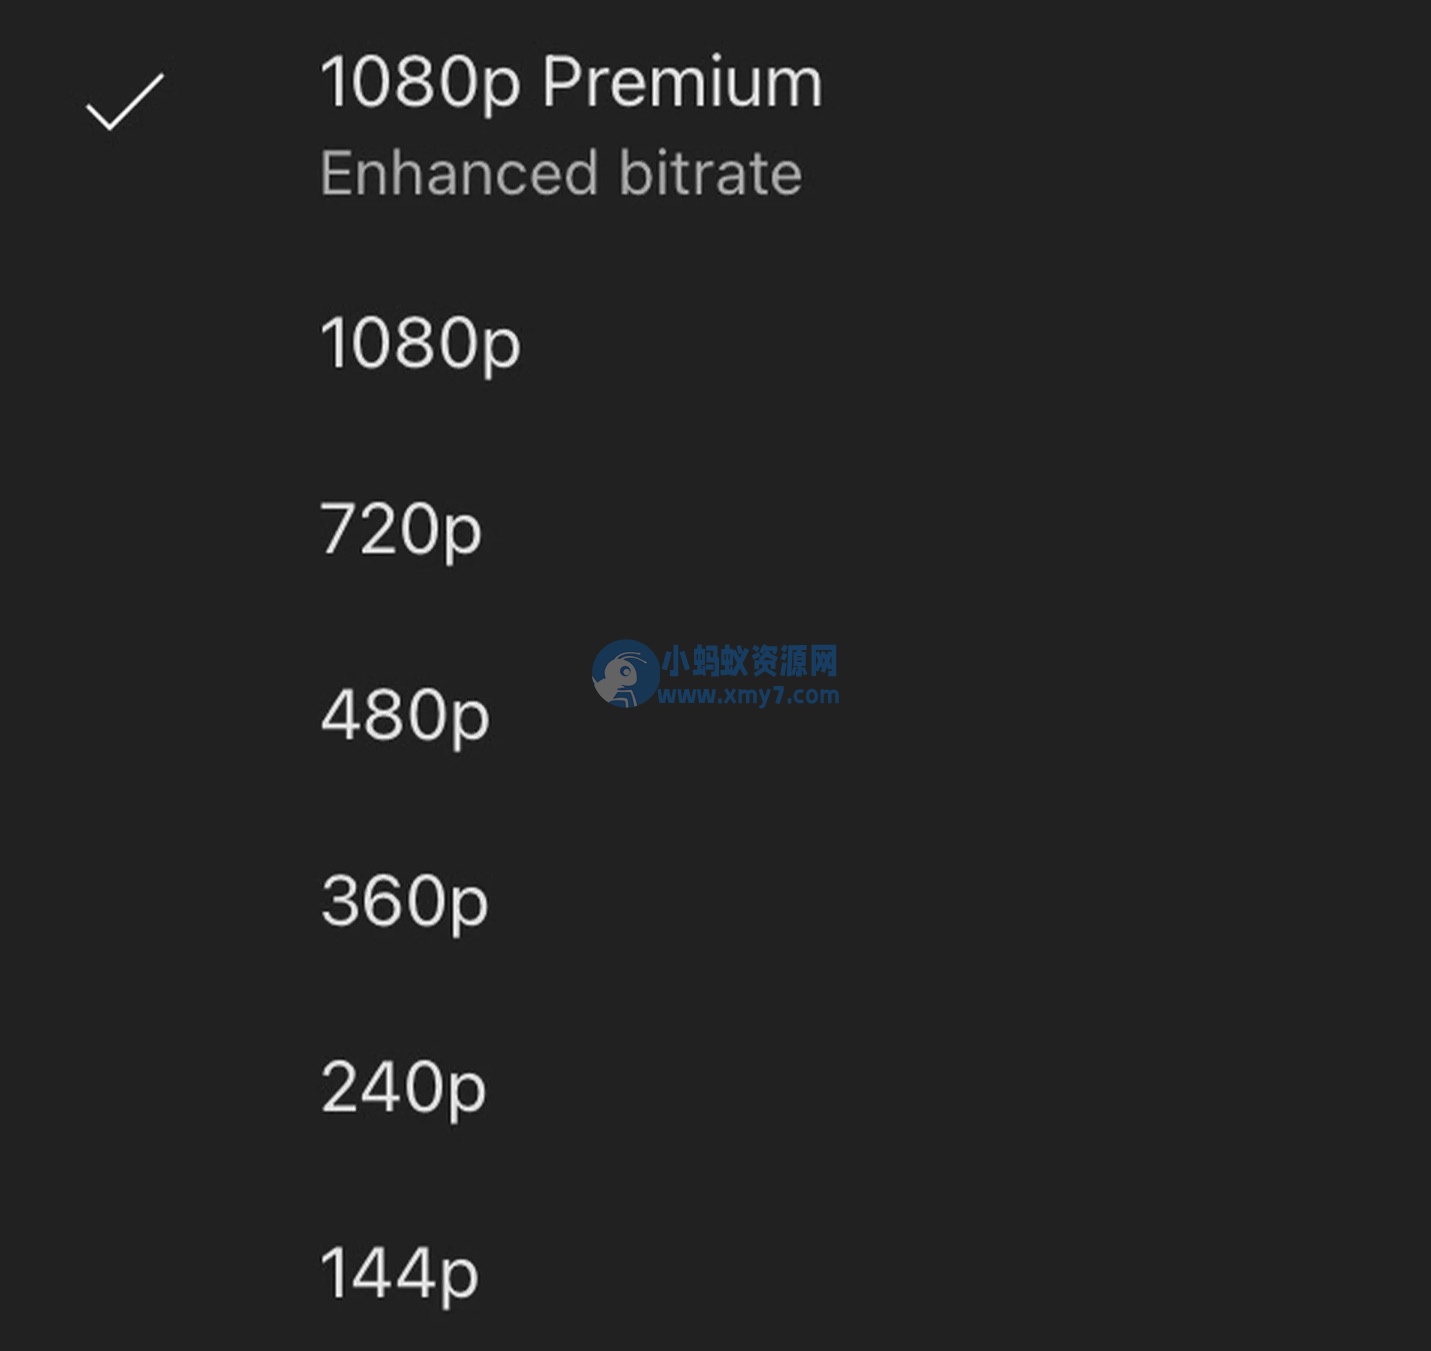 YouTube 面向会员测试“1080p Premium”画质，码率更高